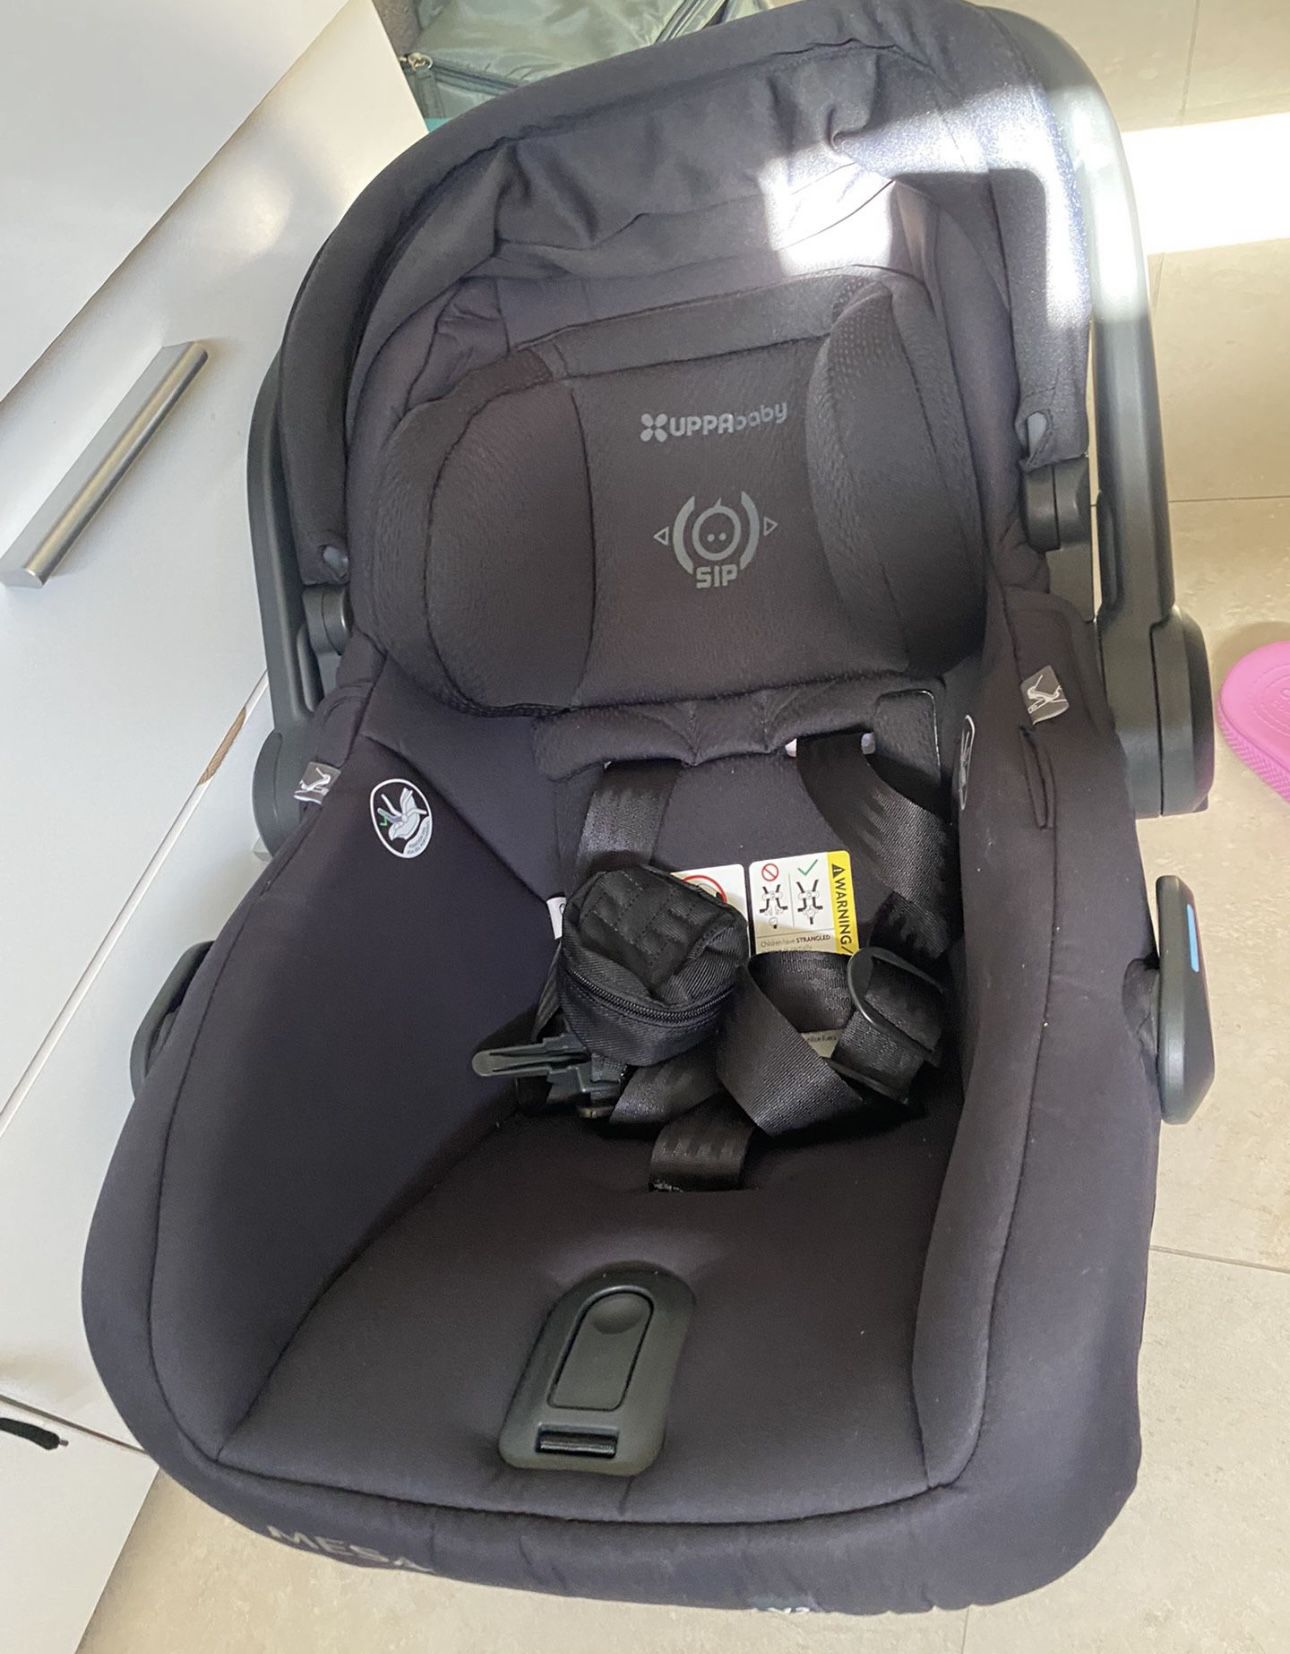 uppa baby car seat